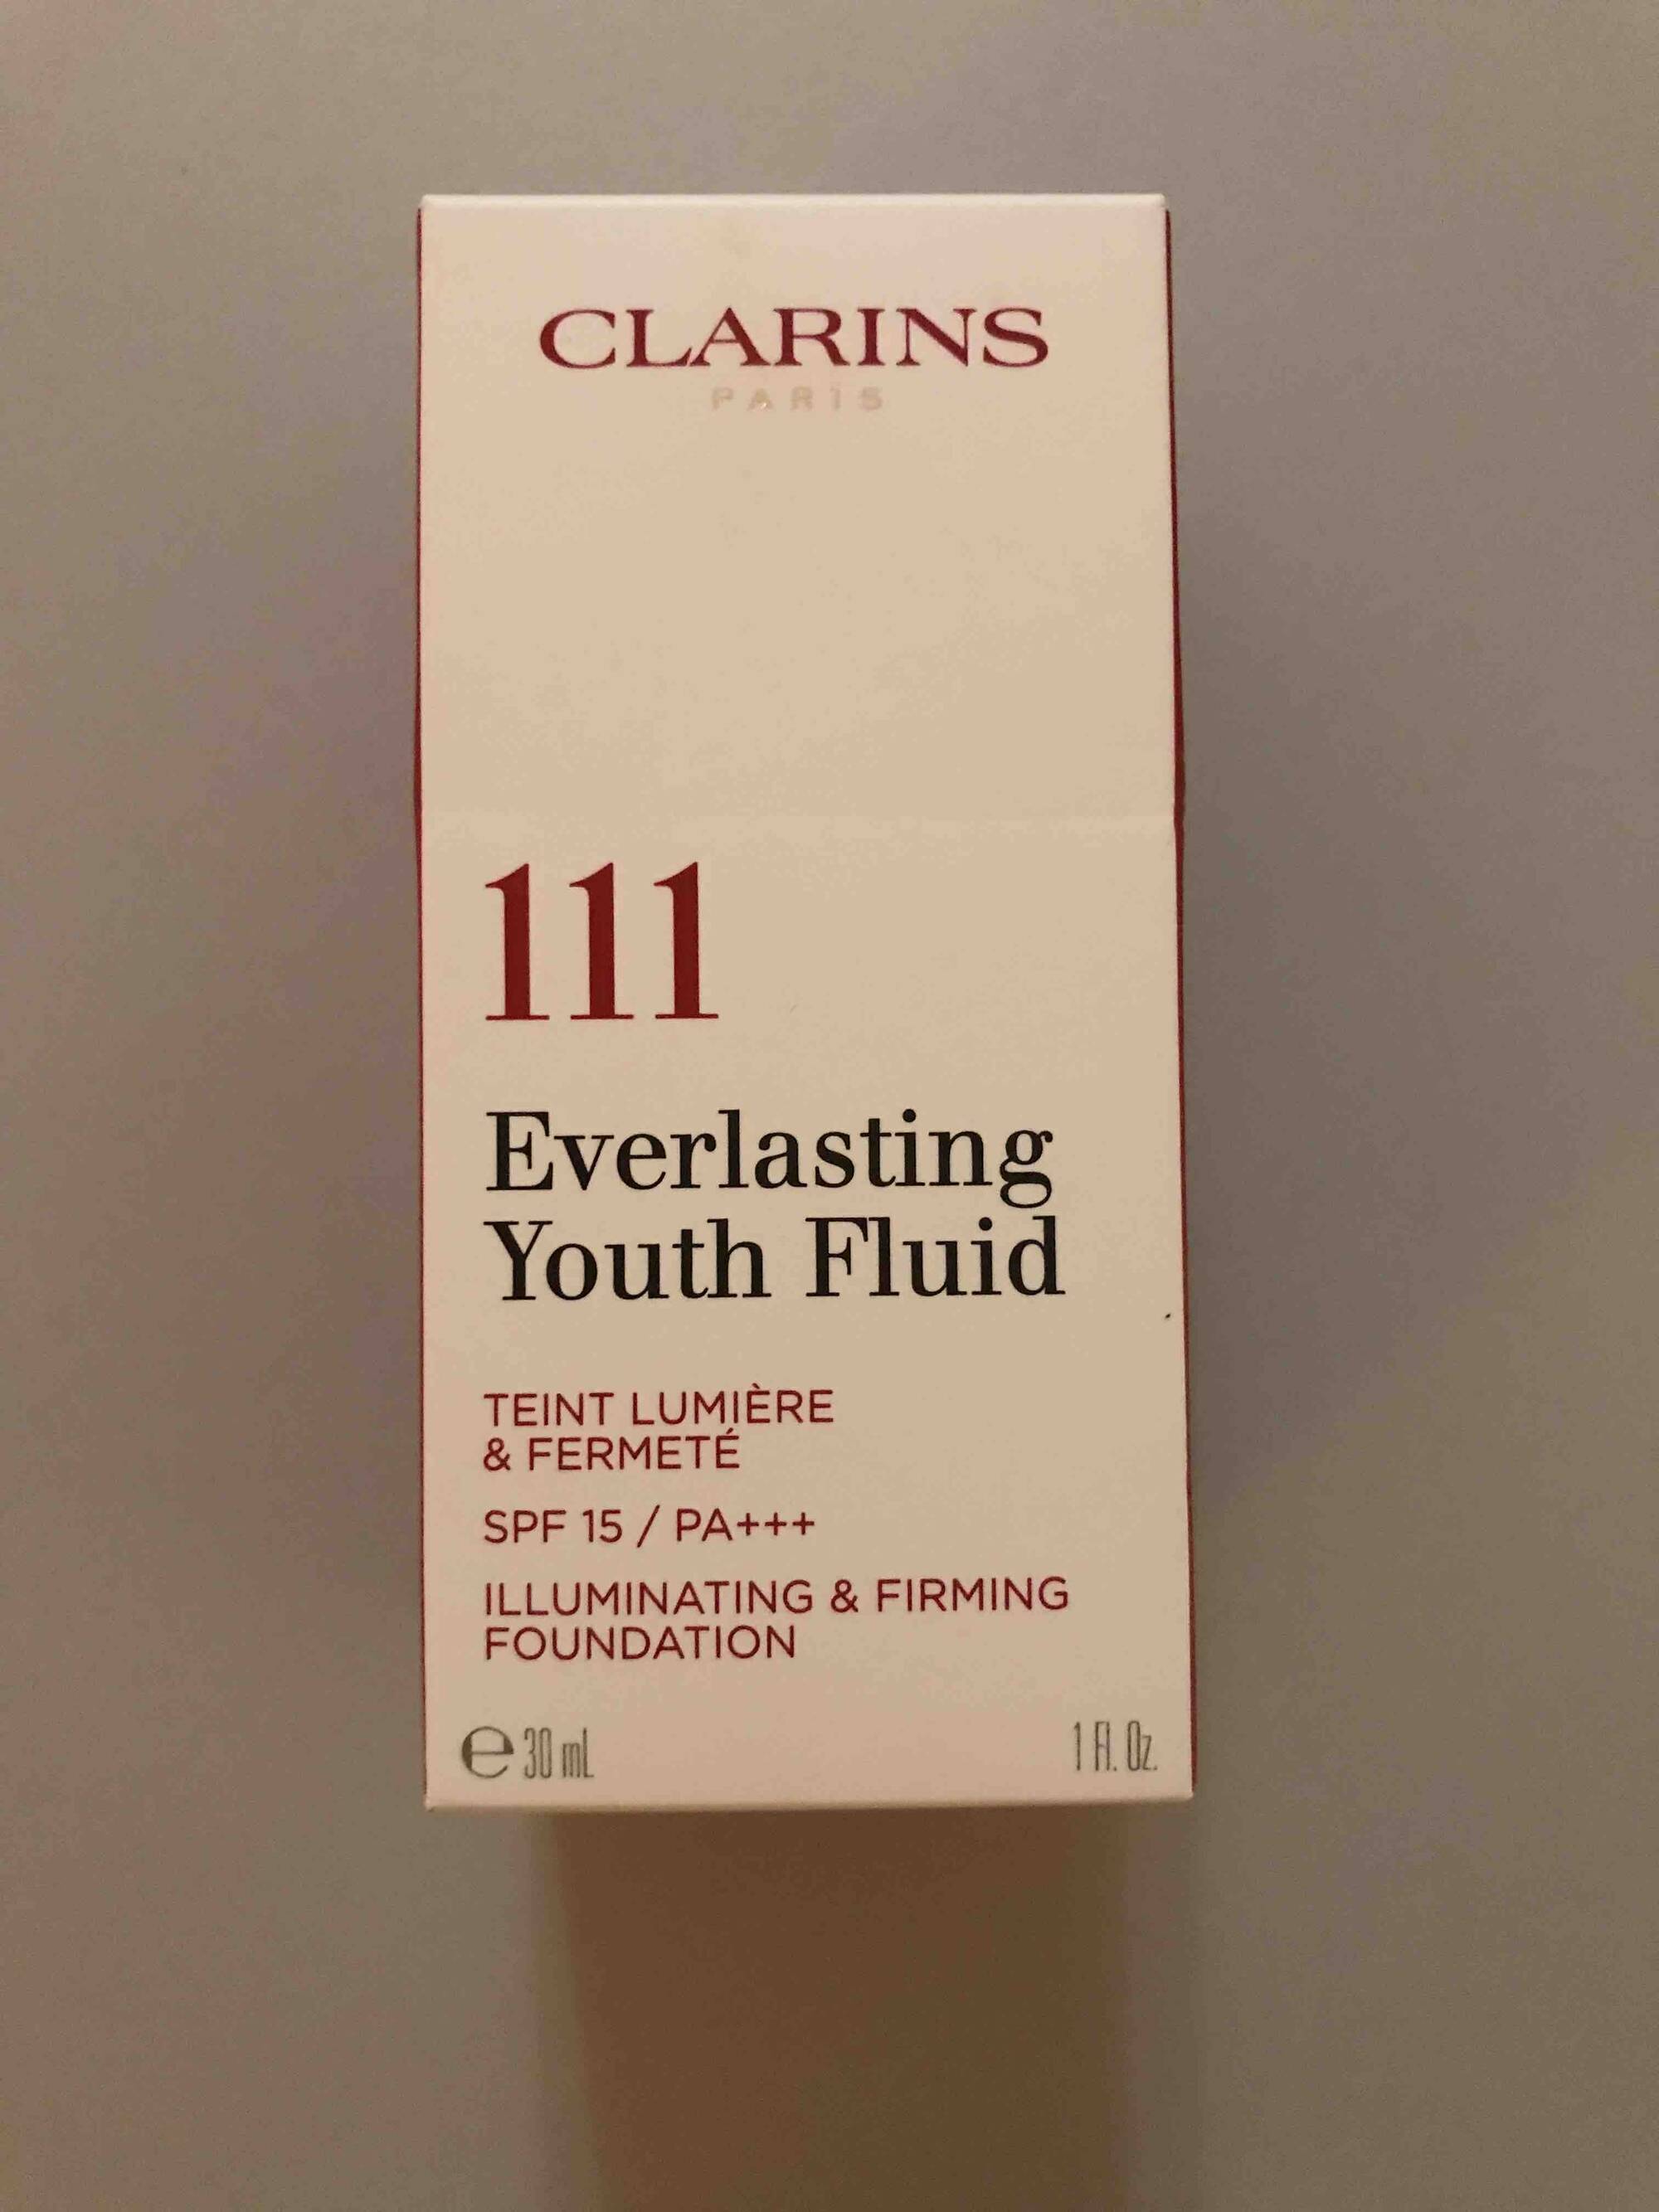 CLARINS - 111 Everlasting Youth fluid - Teint lumière & Fermeté